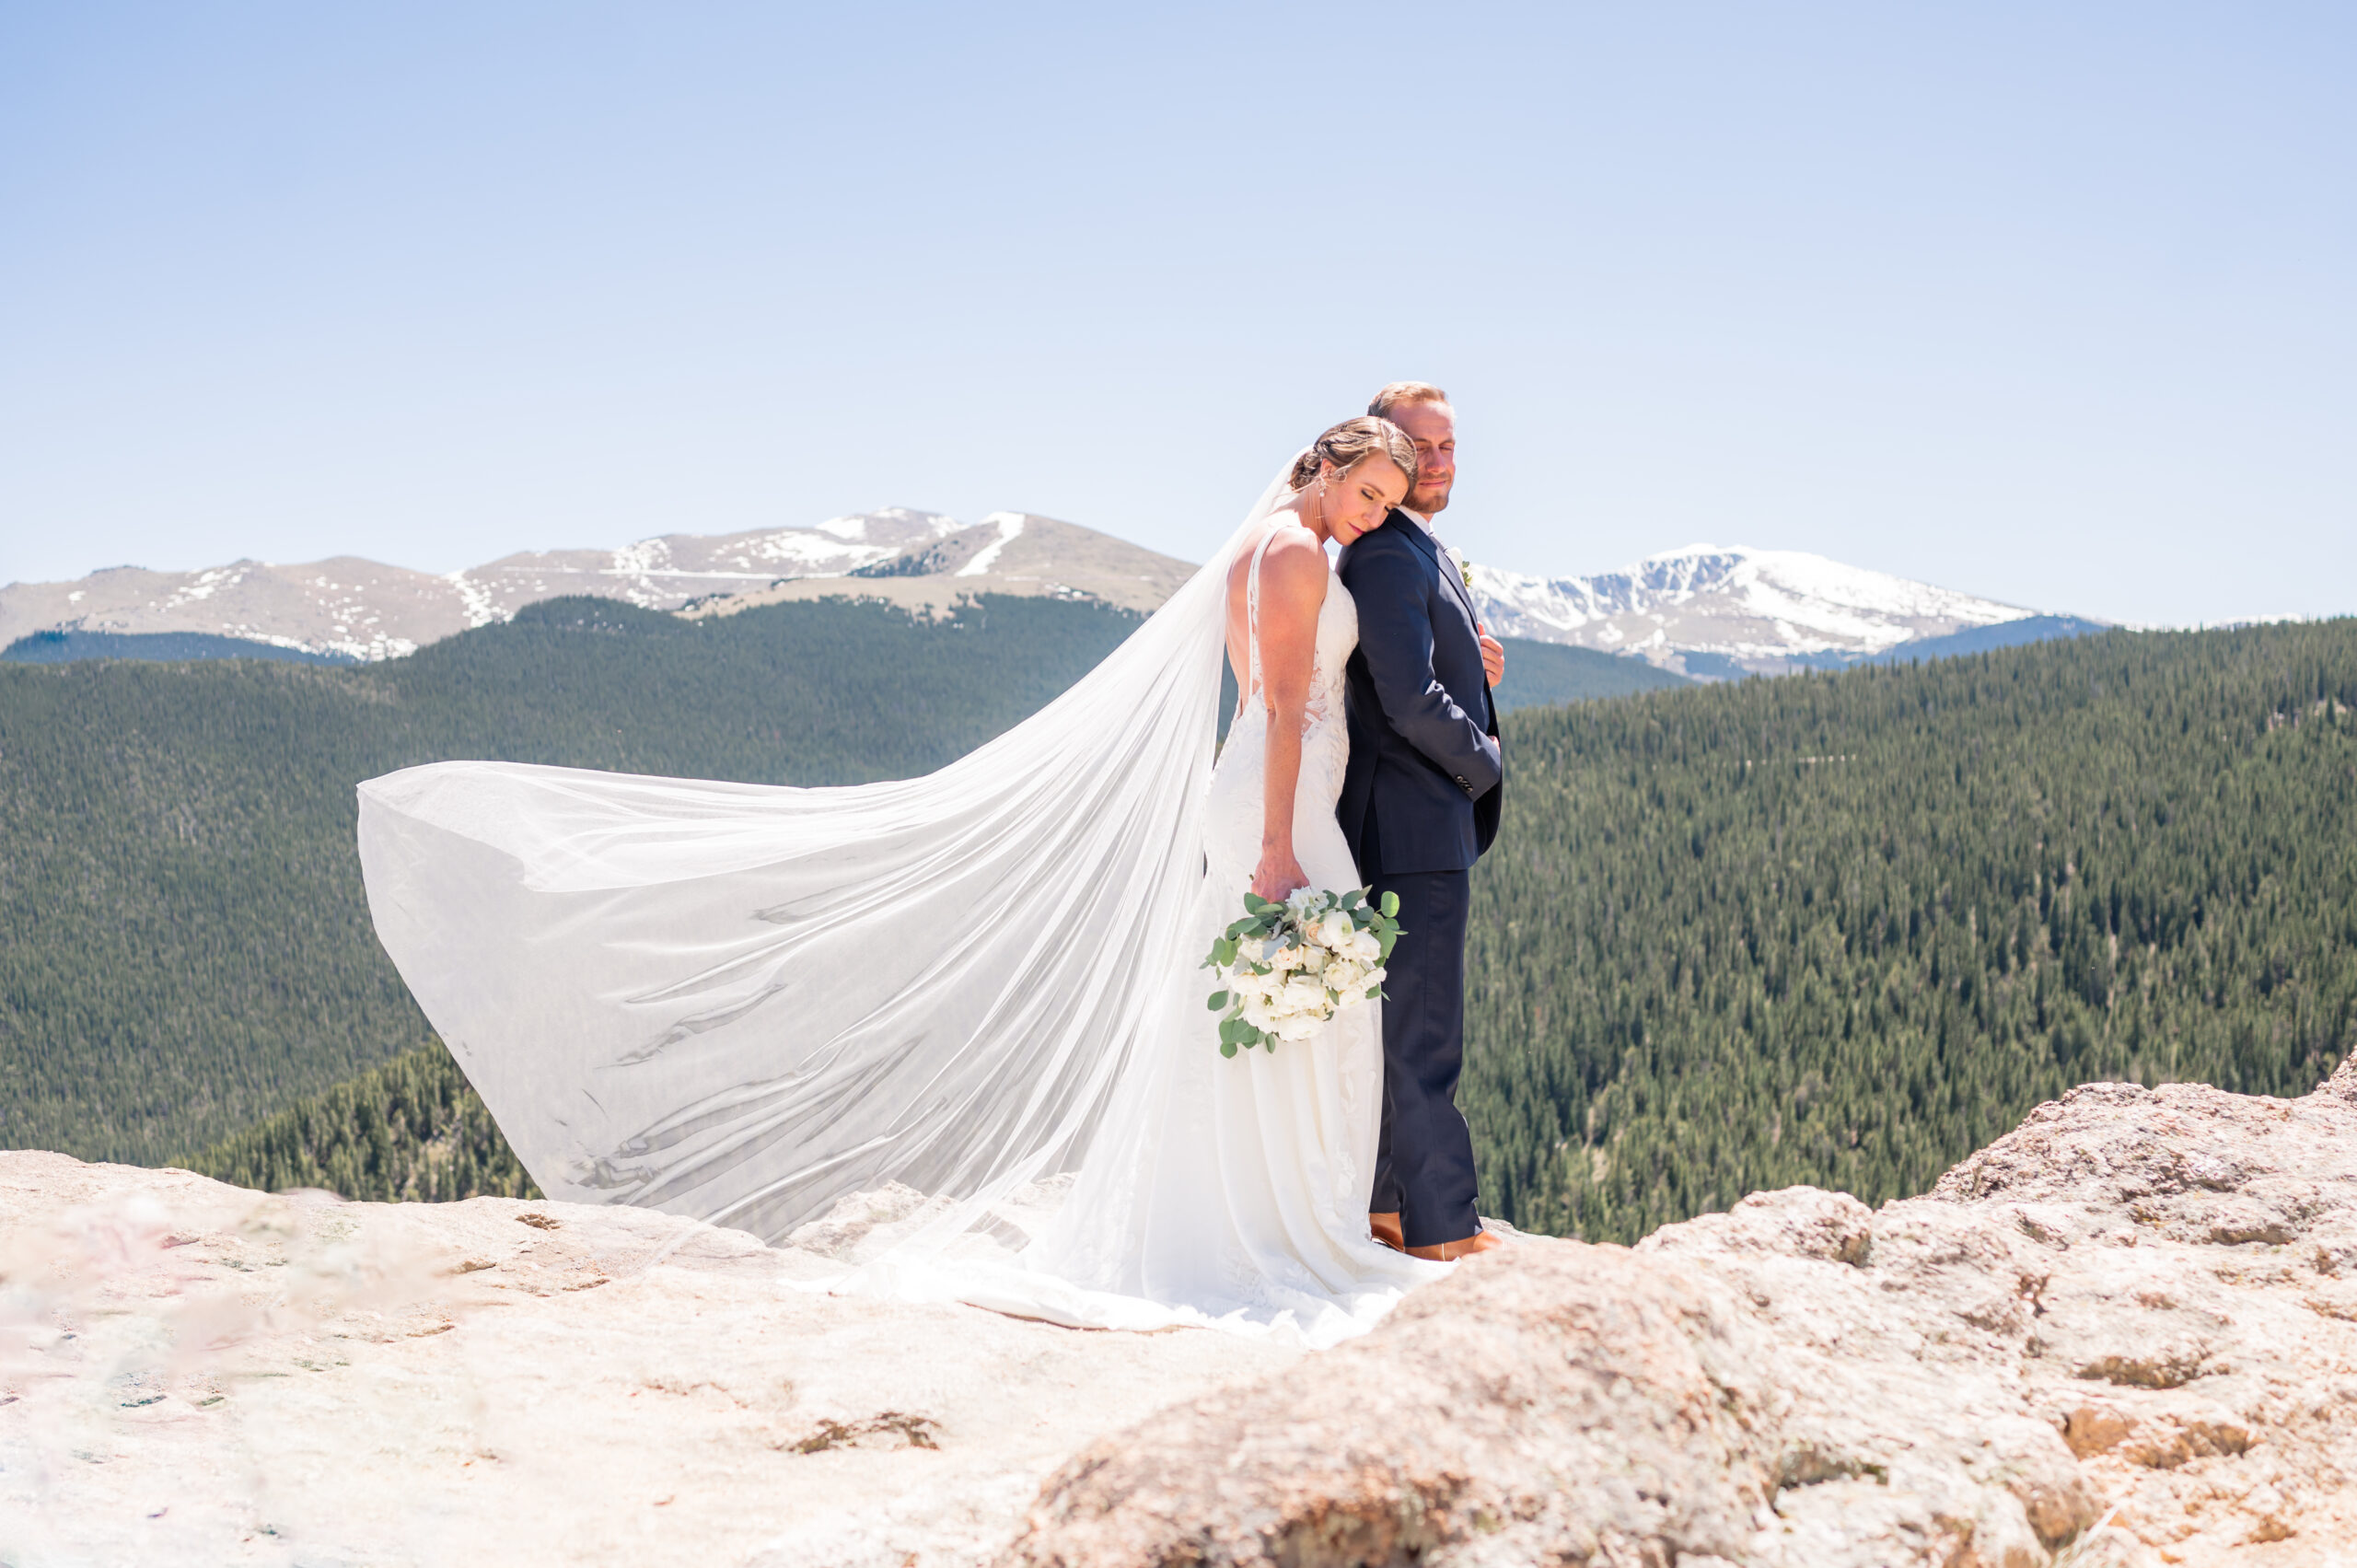 Lauren + Christians wedding at Blackstone Rivers Ranch - Britni Girard Photography - Colorado Wedding Photographer